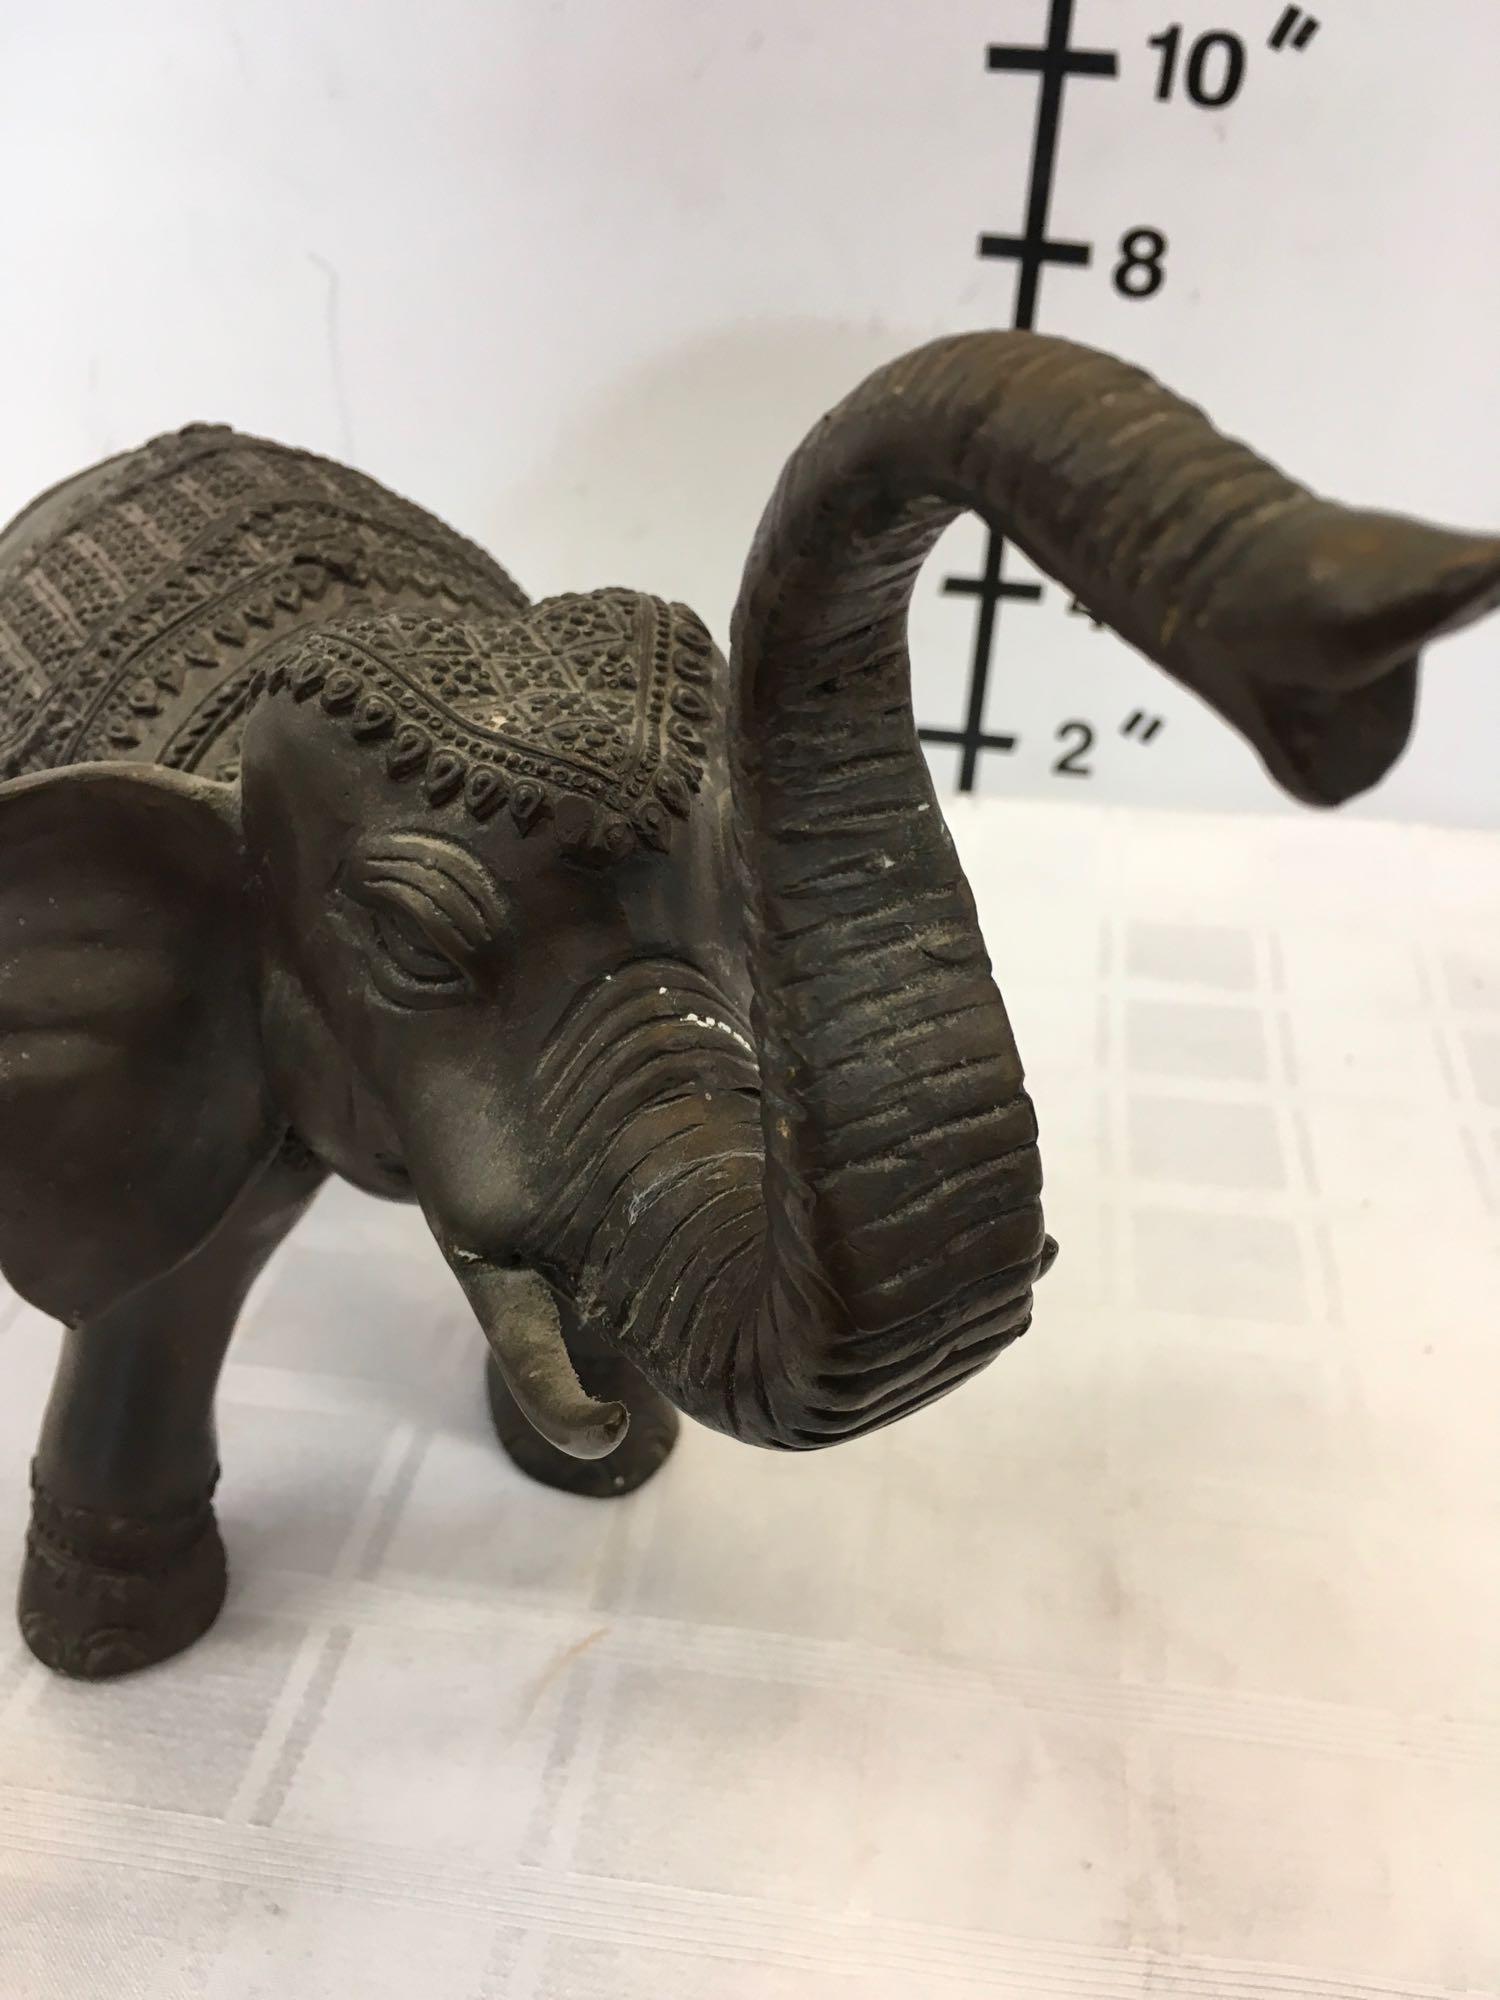 Metal elephant statue